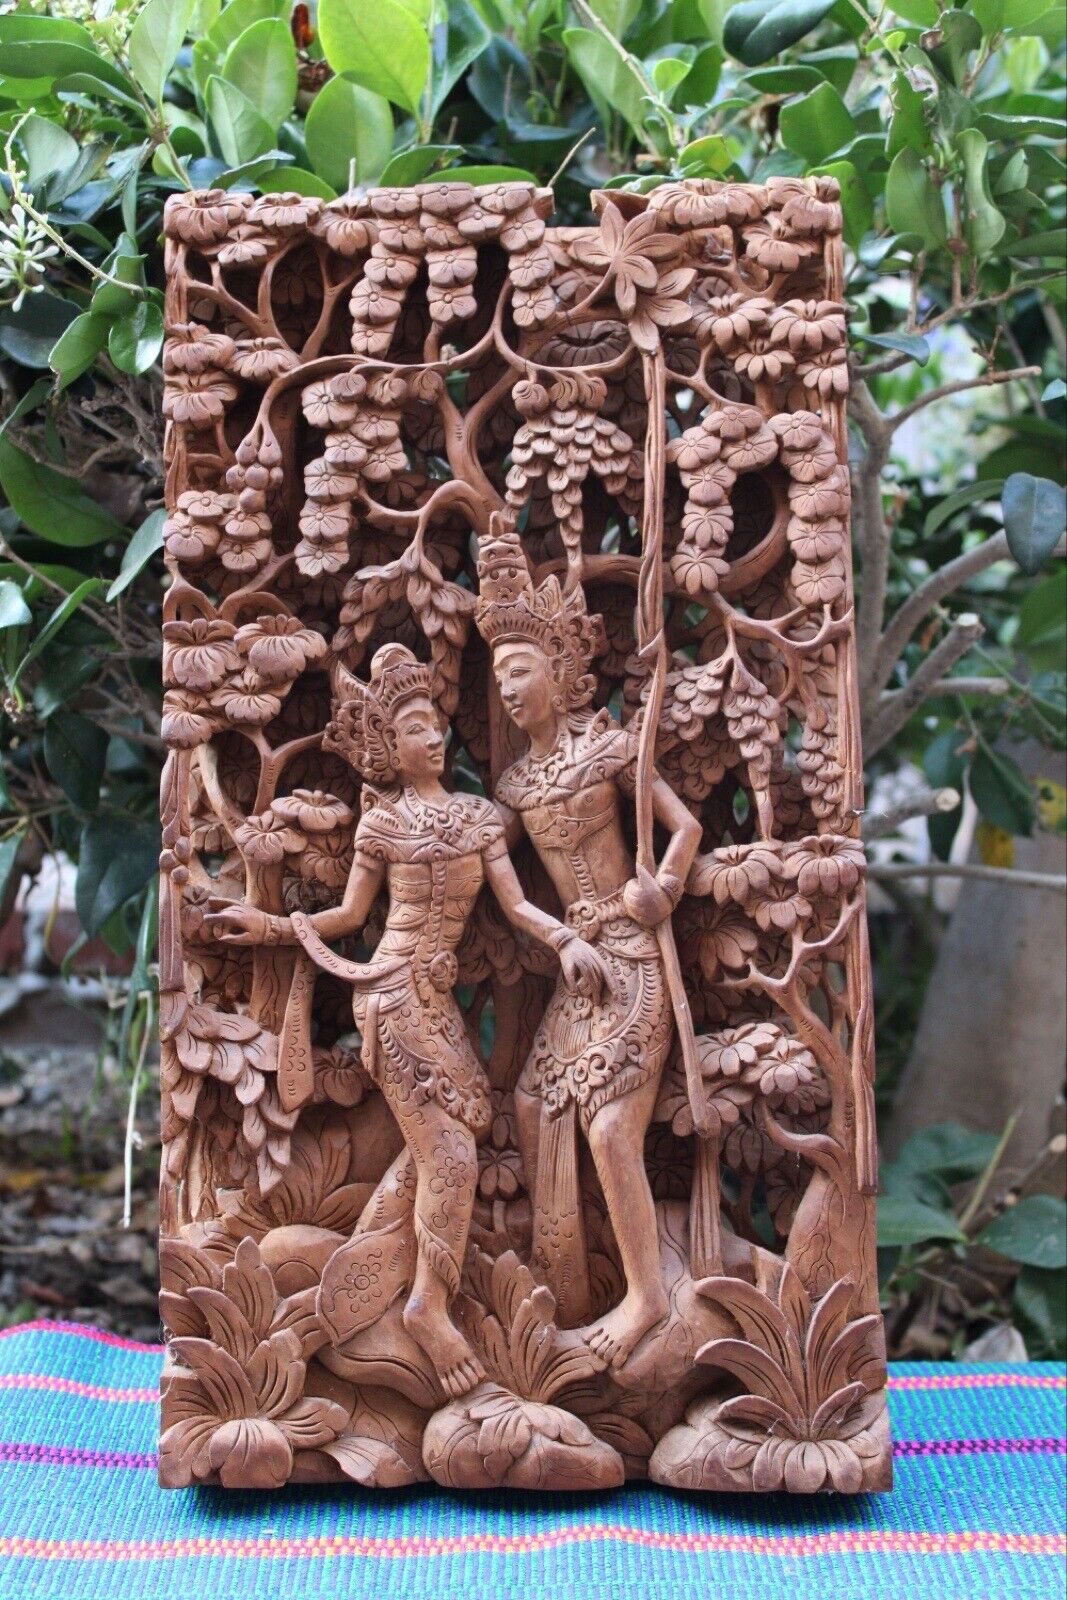 Balinese Hand Carved Wood Sculptural Panel Portraying Rama & Sita 17.5”